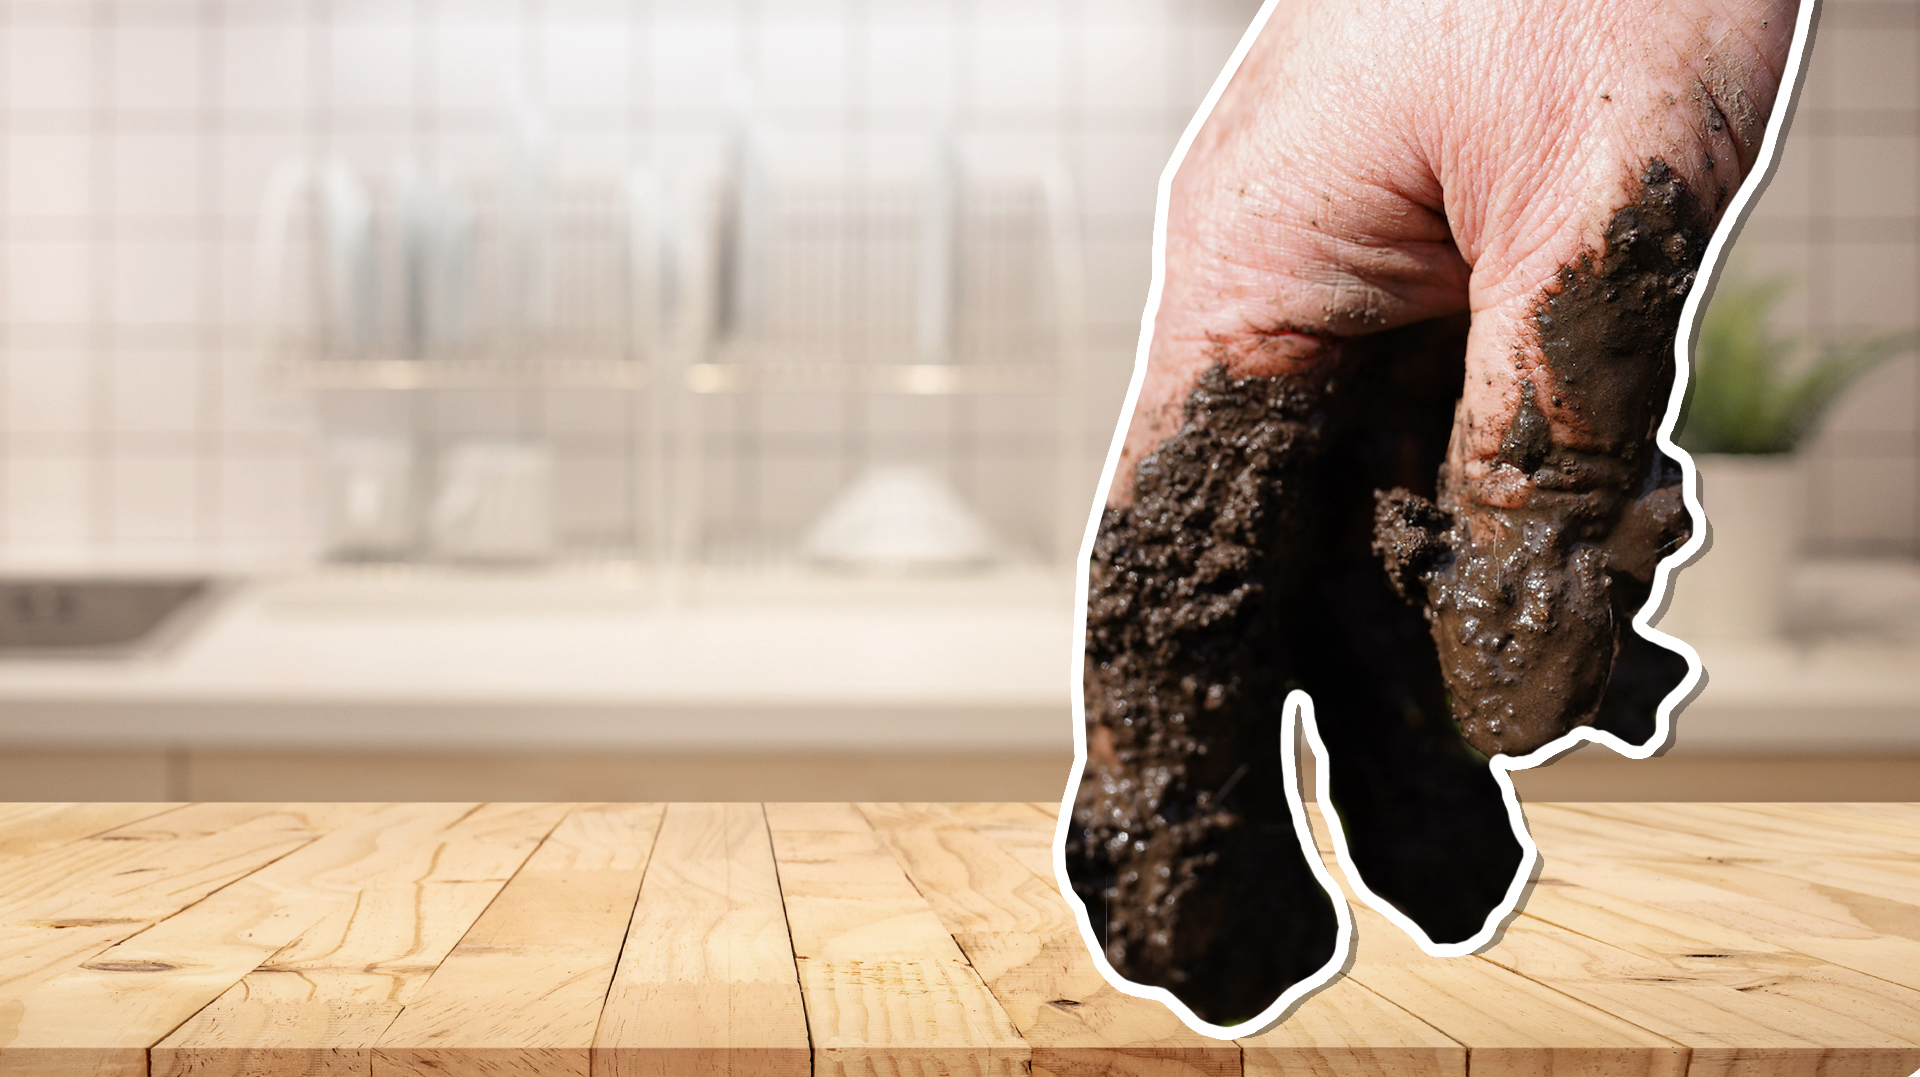 A muddy hand in a clean kitchen